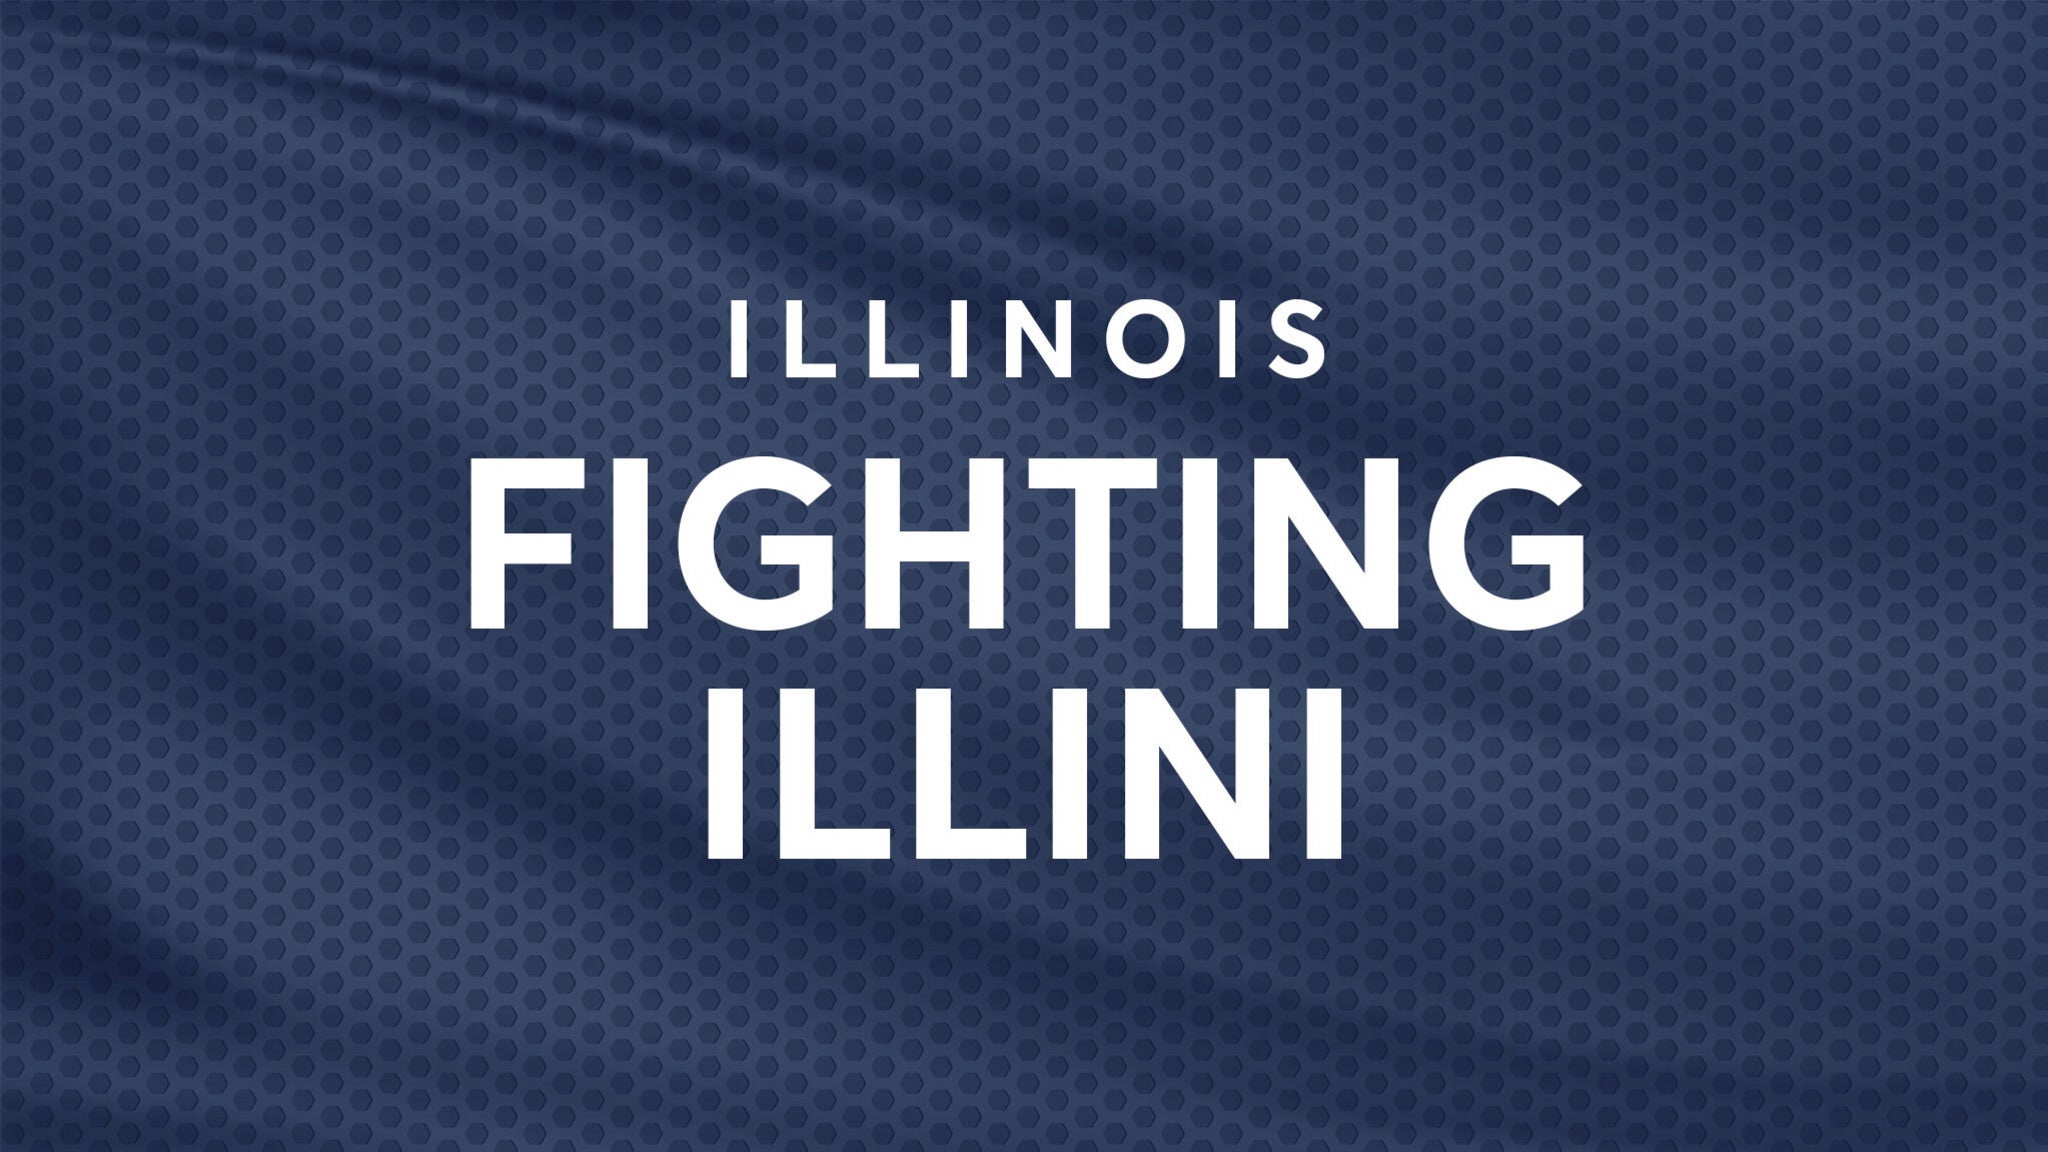 University of Illinois Fighting Illini Baseball presale information on freepresalepasswords.com